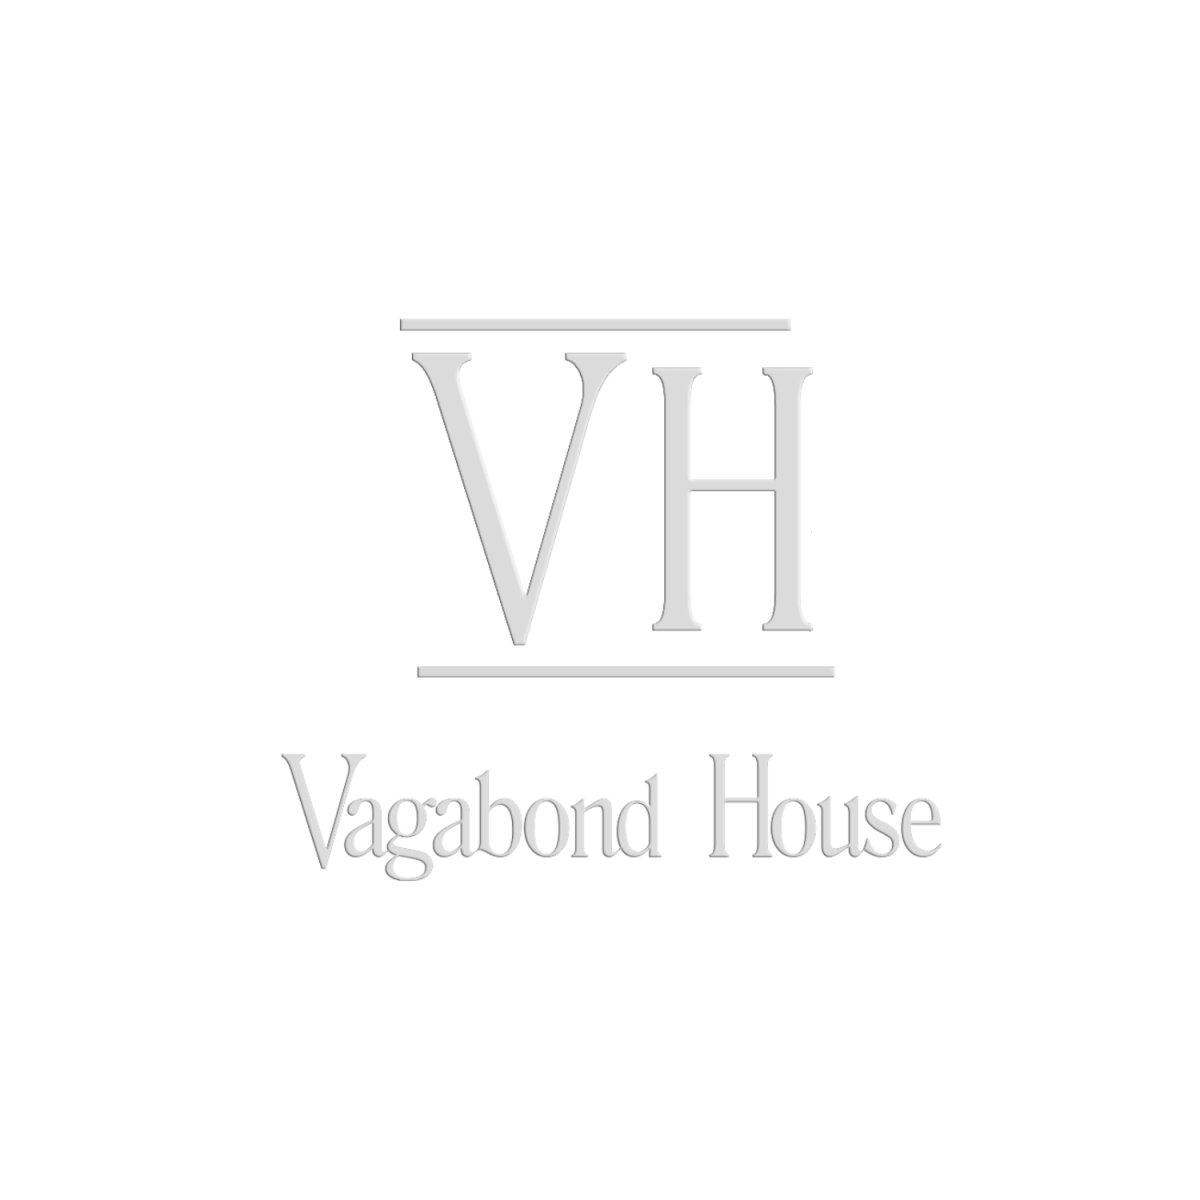 Vagabond House Logo